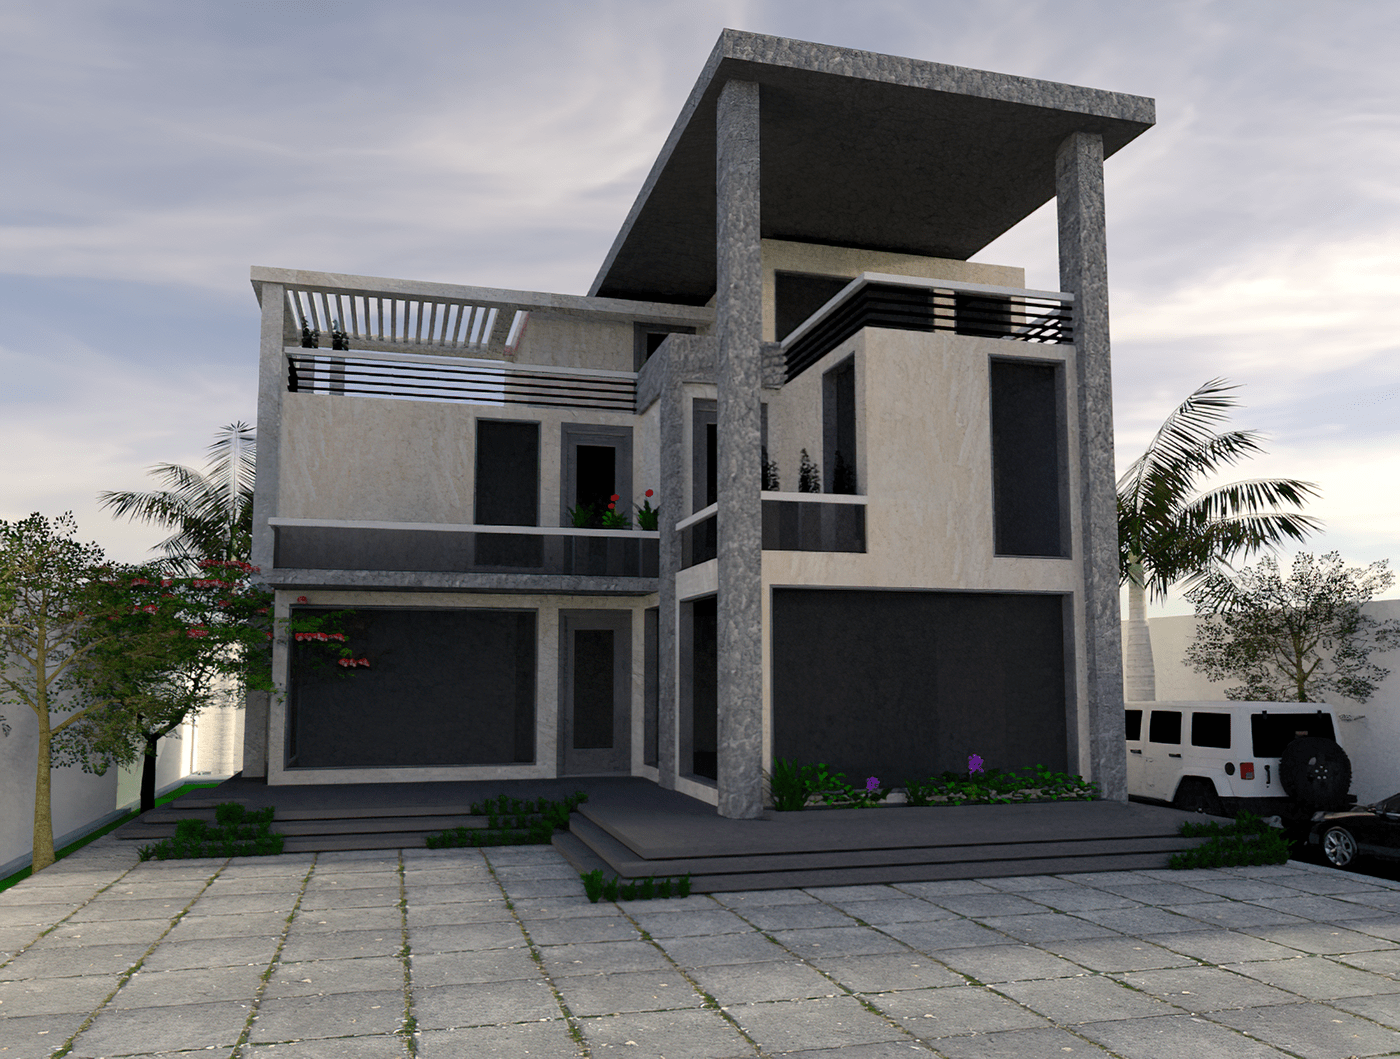 architectural design Desert House egypt cairo architecture visualization modern exterior vray